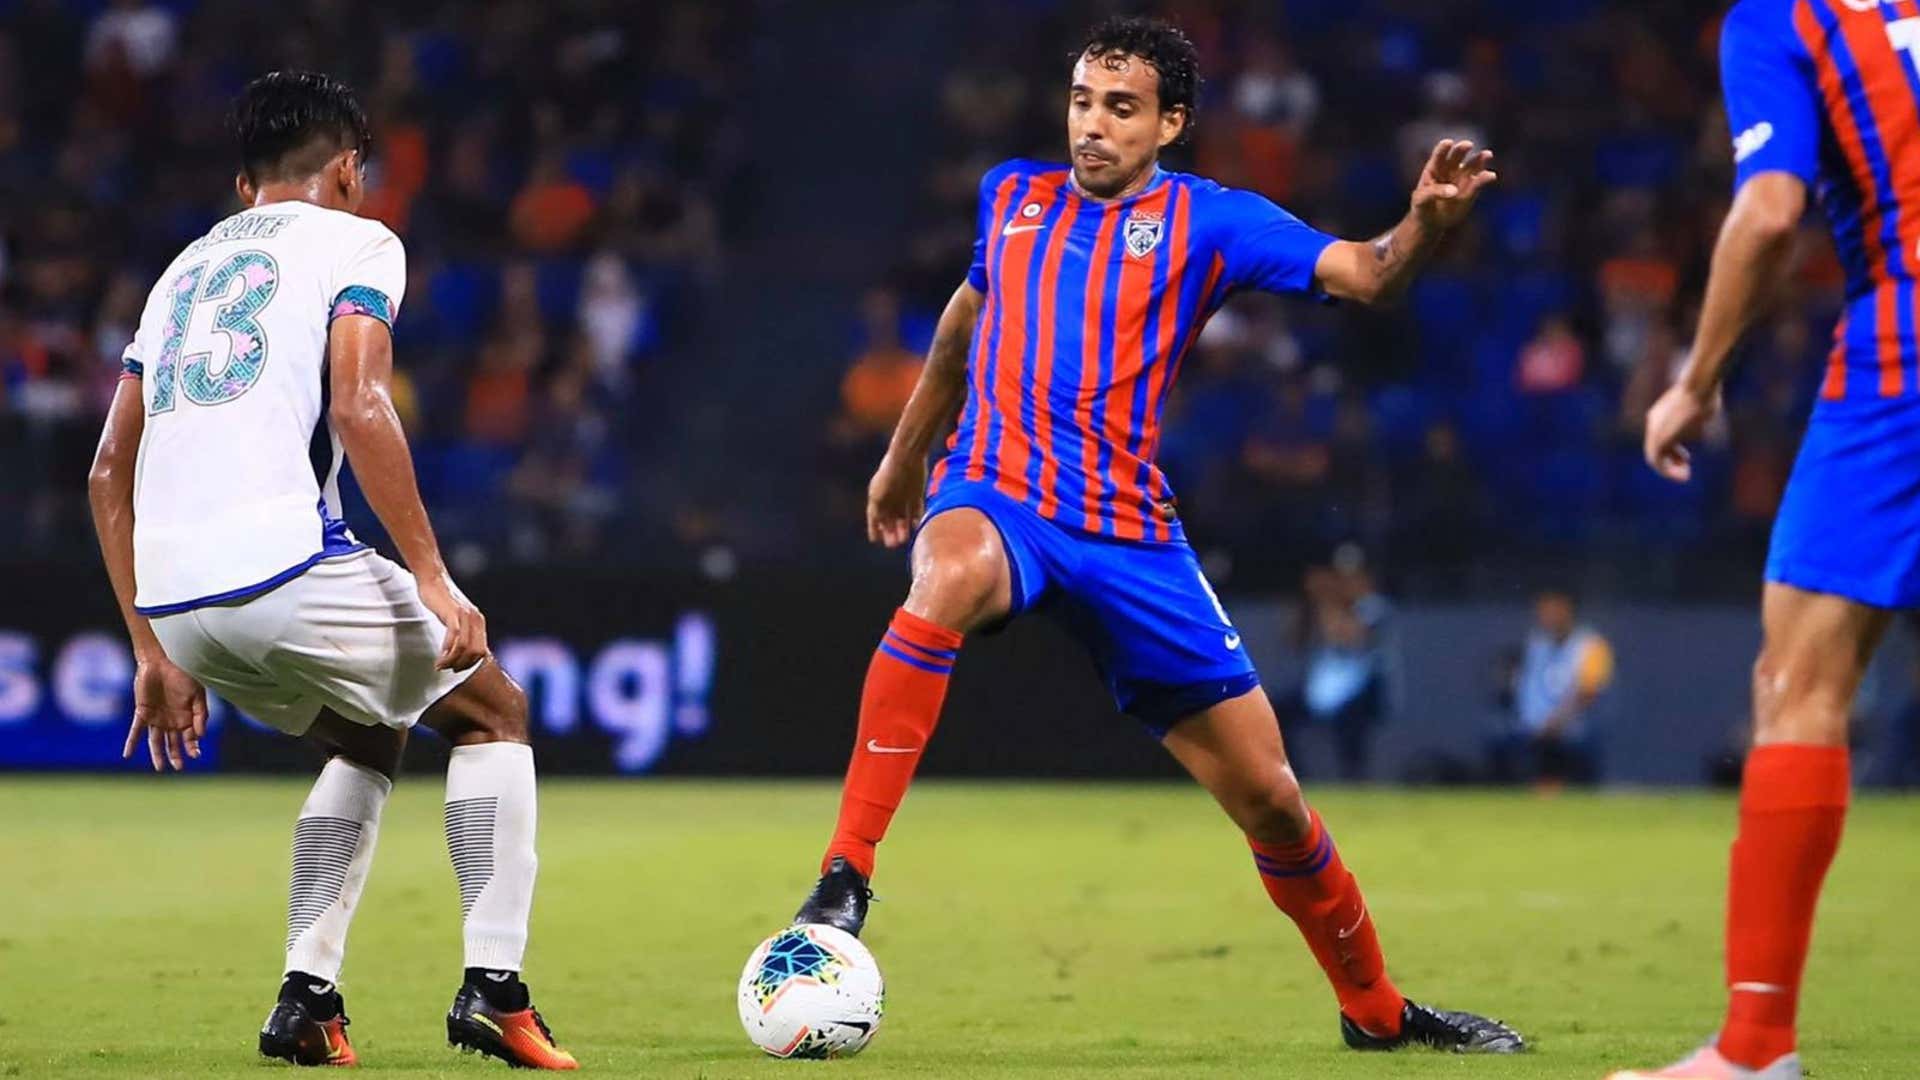 Diogo Luis Santo, Johor Darul Ta'zim v UiTM FC, Super League, 7 Mar 2020